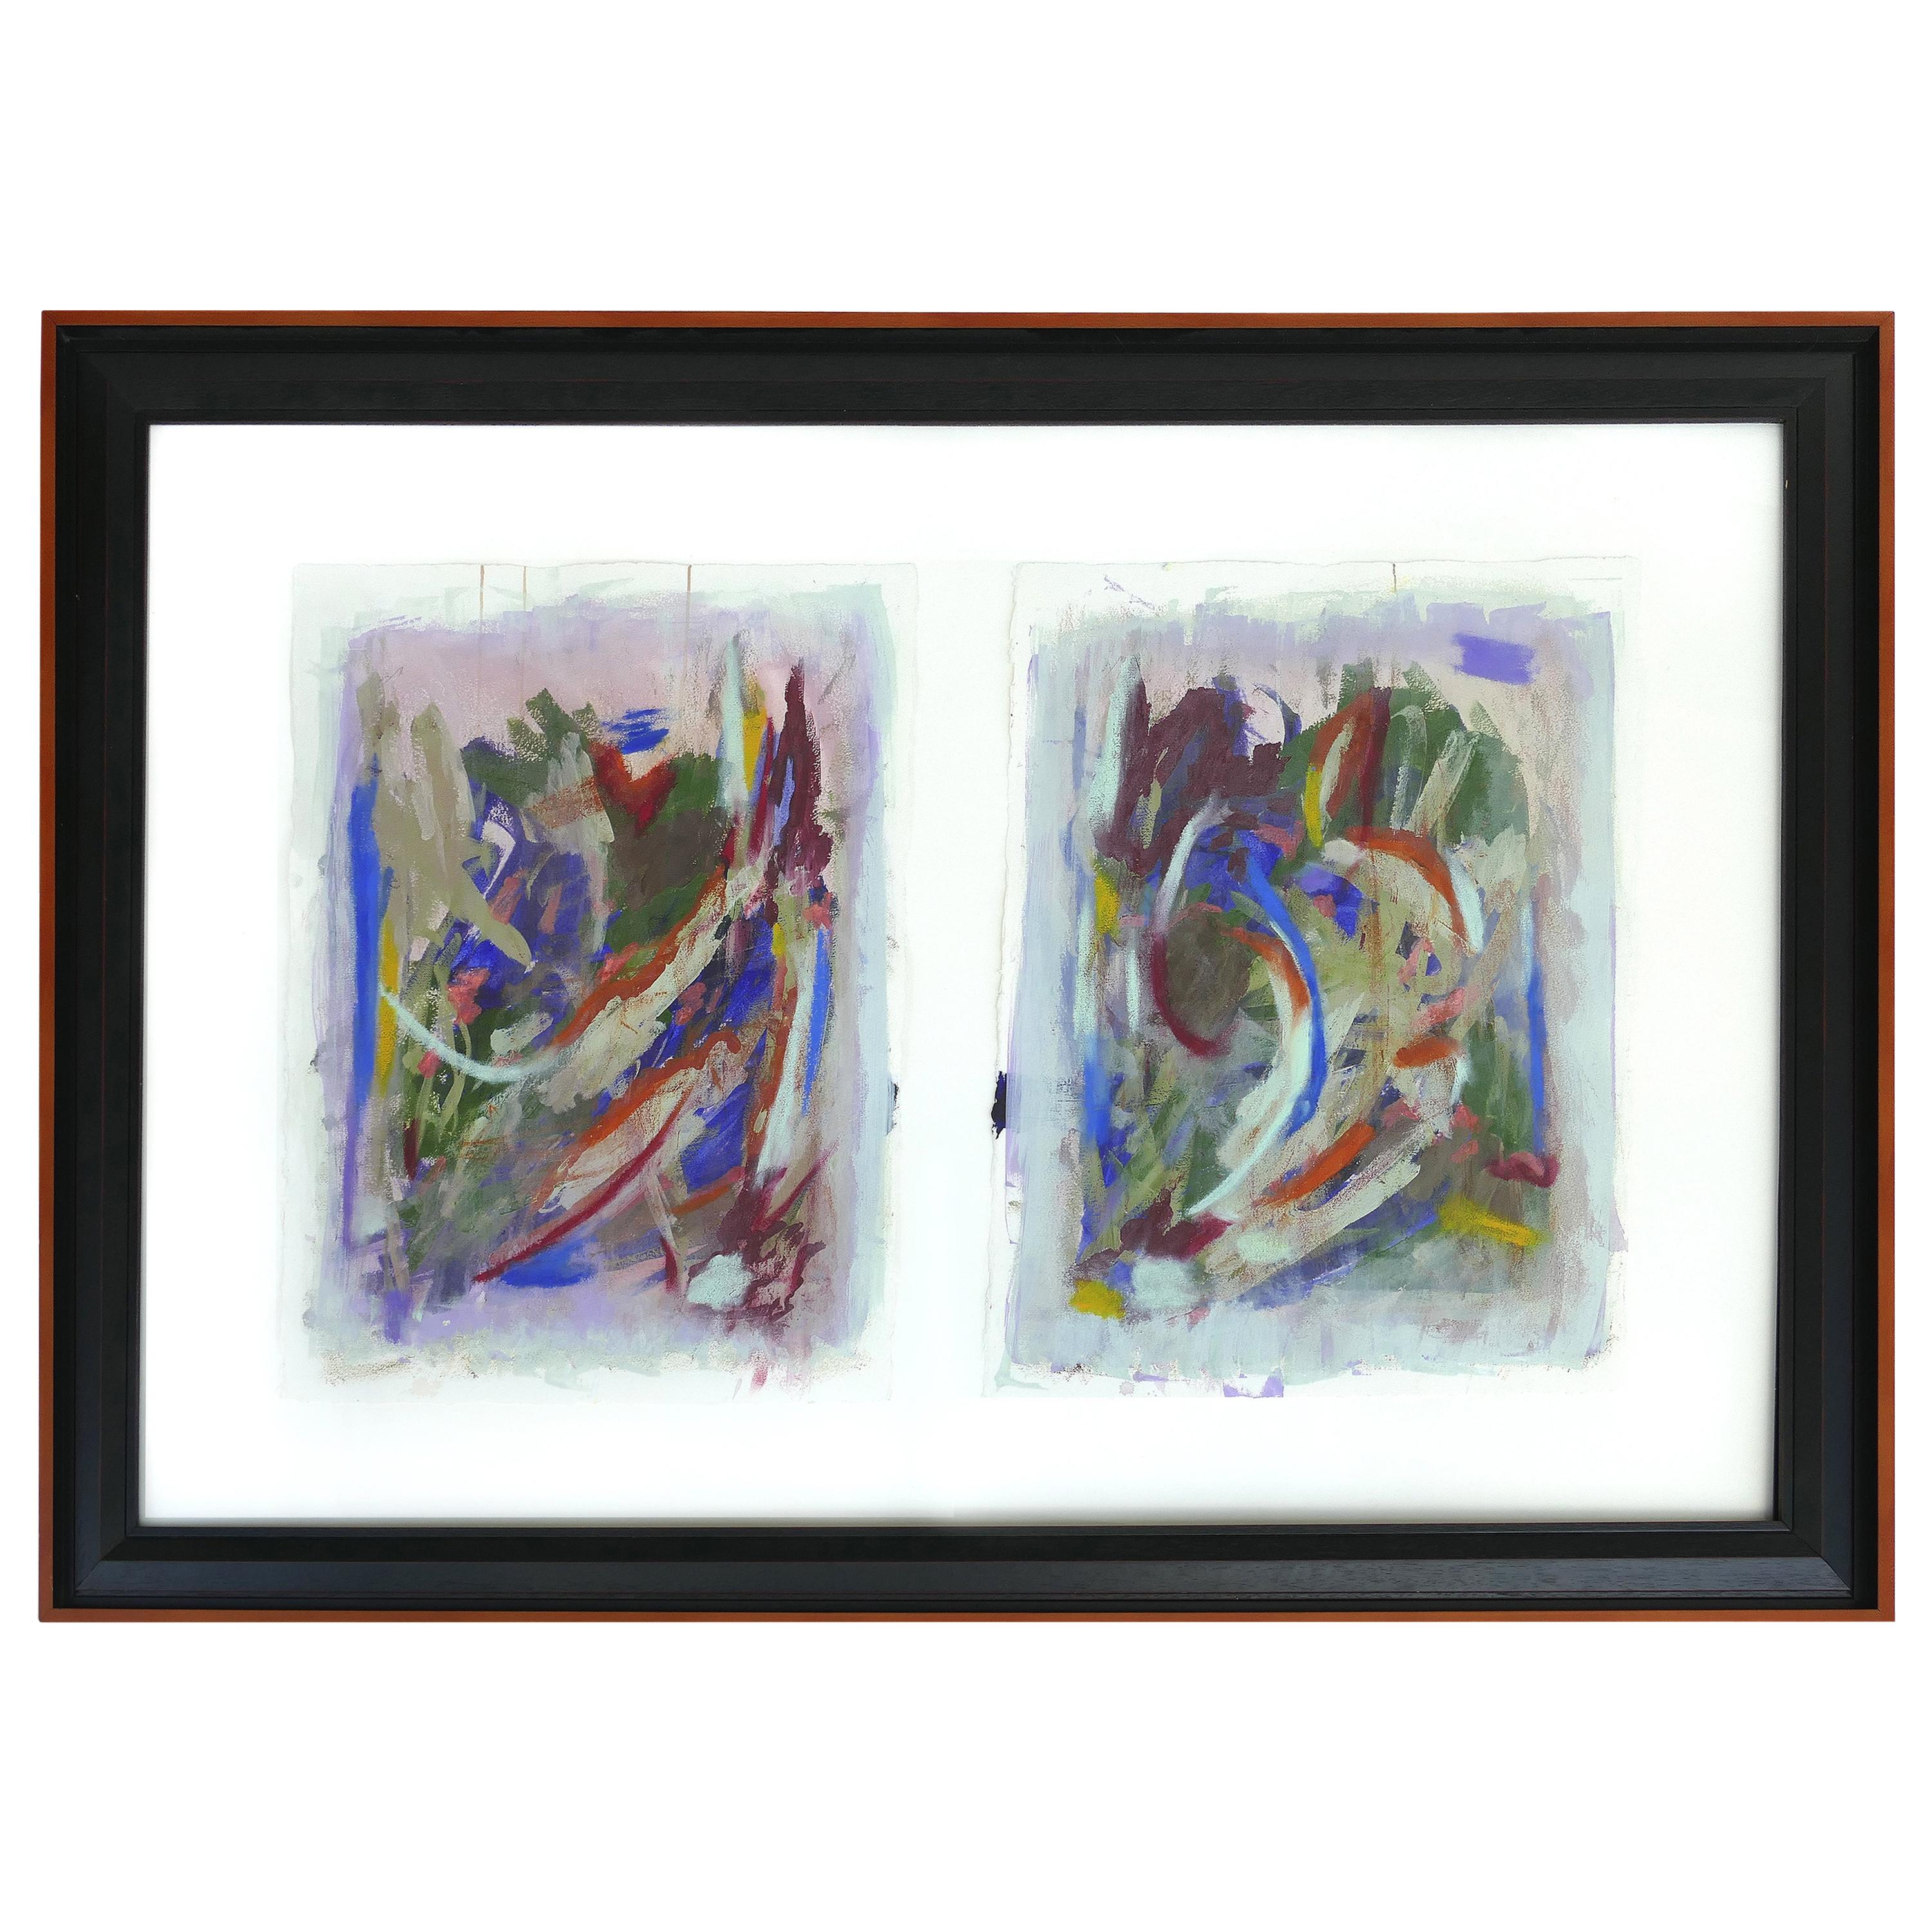 Großes abstraktes Diptychon-Gemälde im Vintage-Stil, signiert, 2014, gerahmt unter Glas